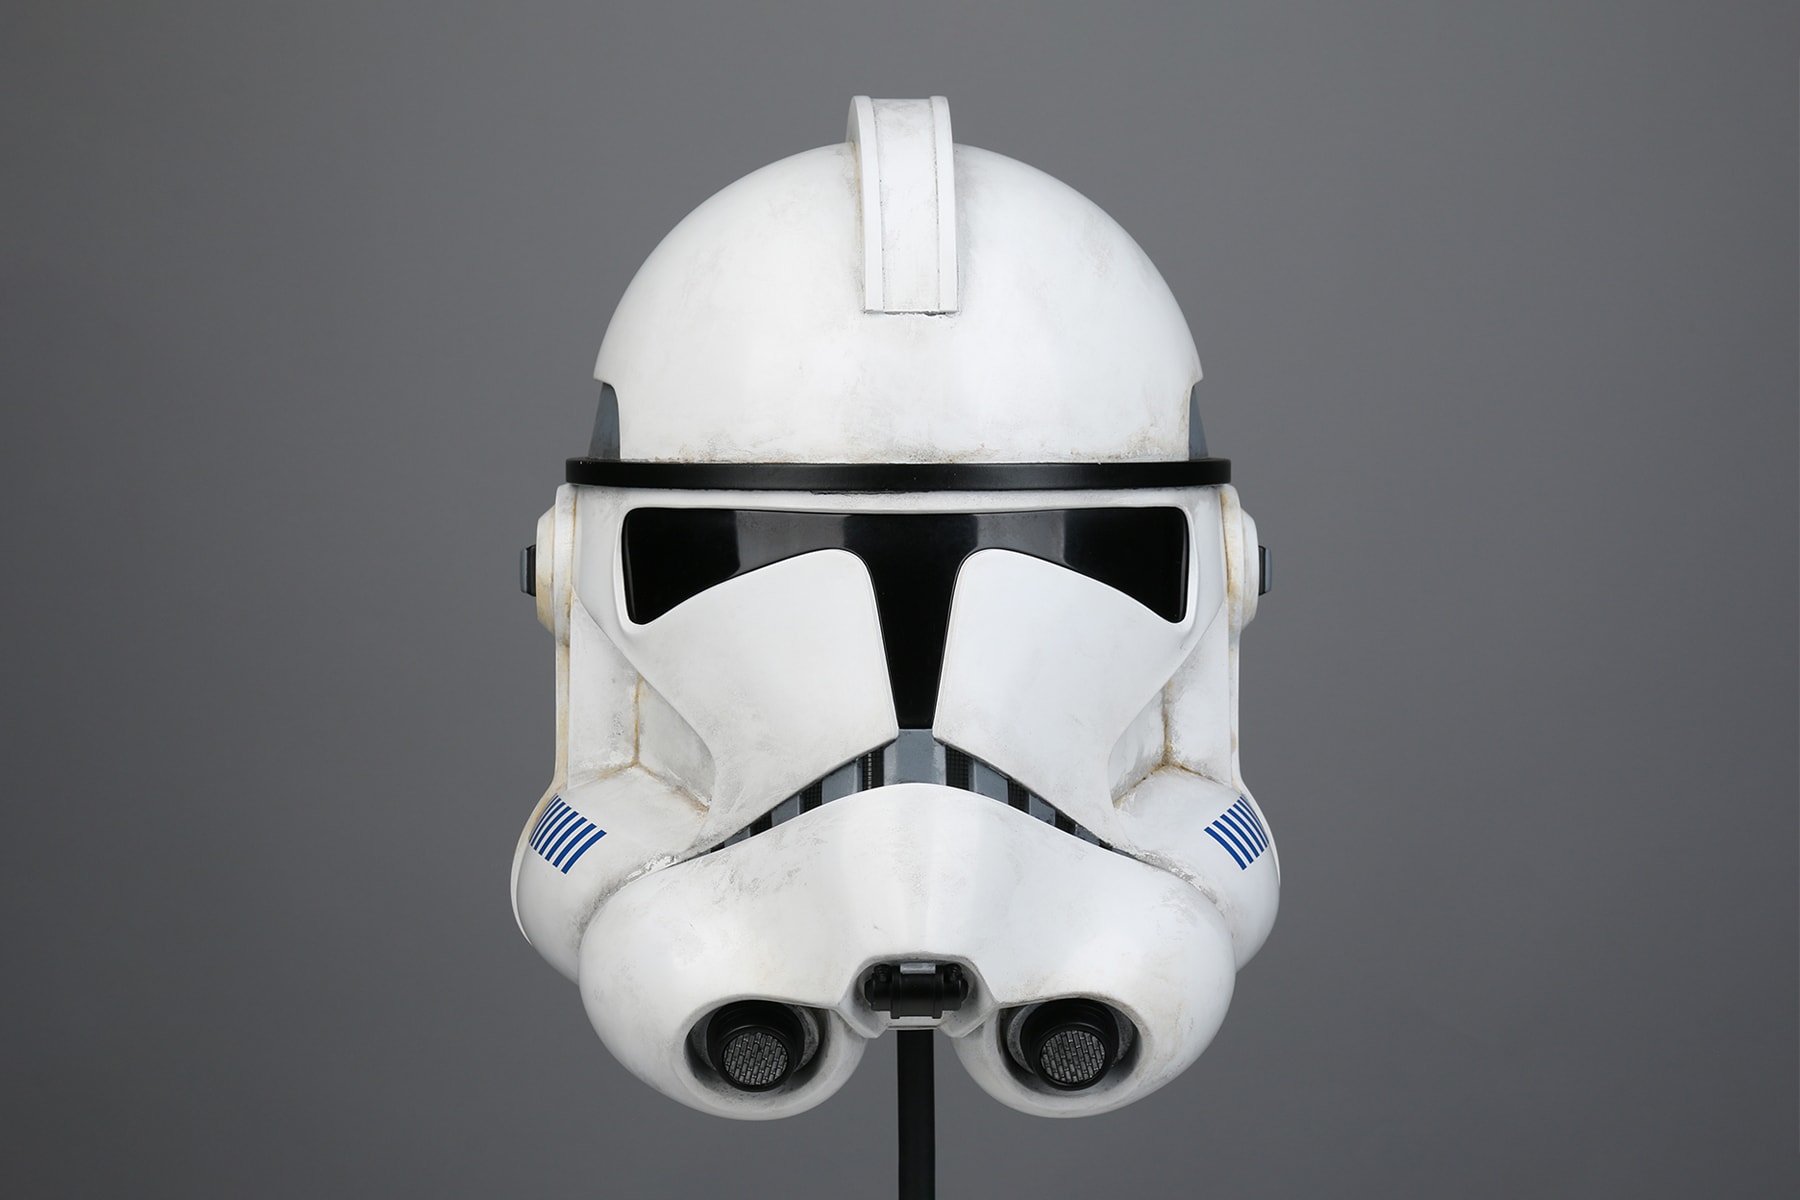 Denuo Novo STAR WARS Clone Trooper Phase II Helmet release lucasfilms cosplay movies memorabilia collectibles 